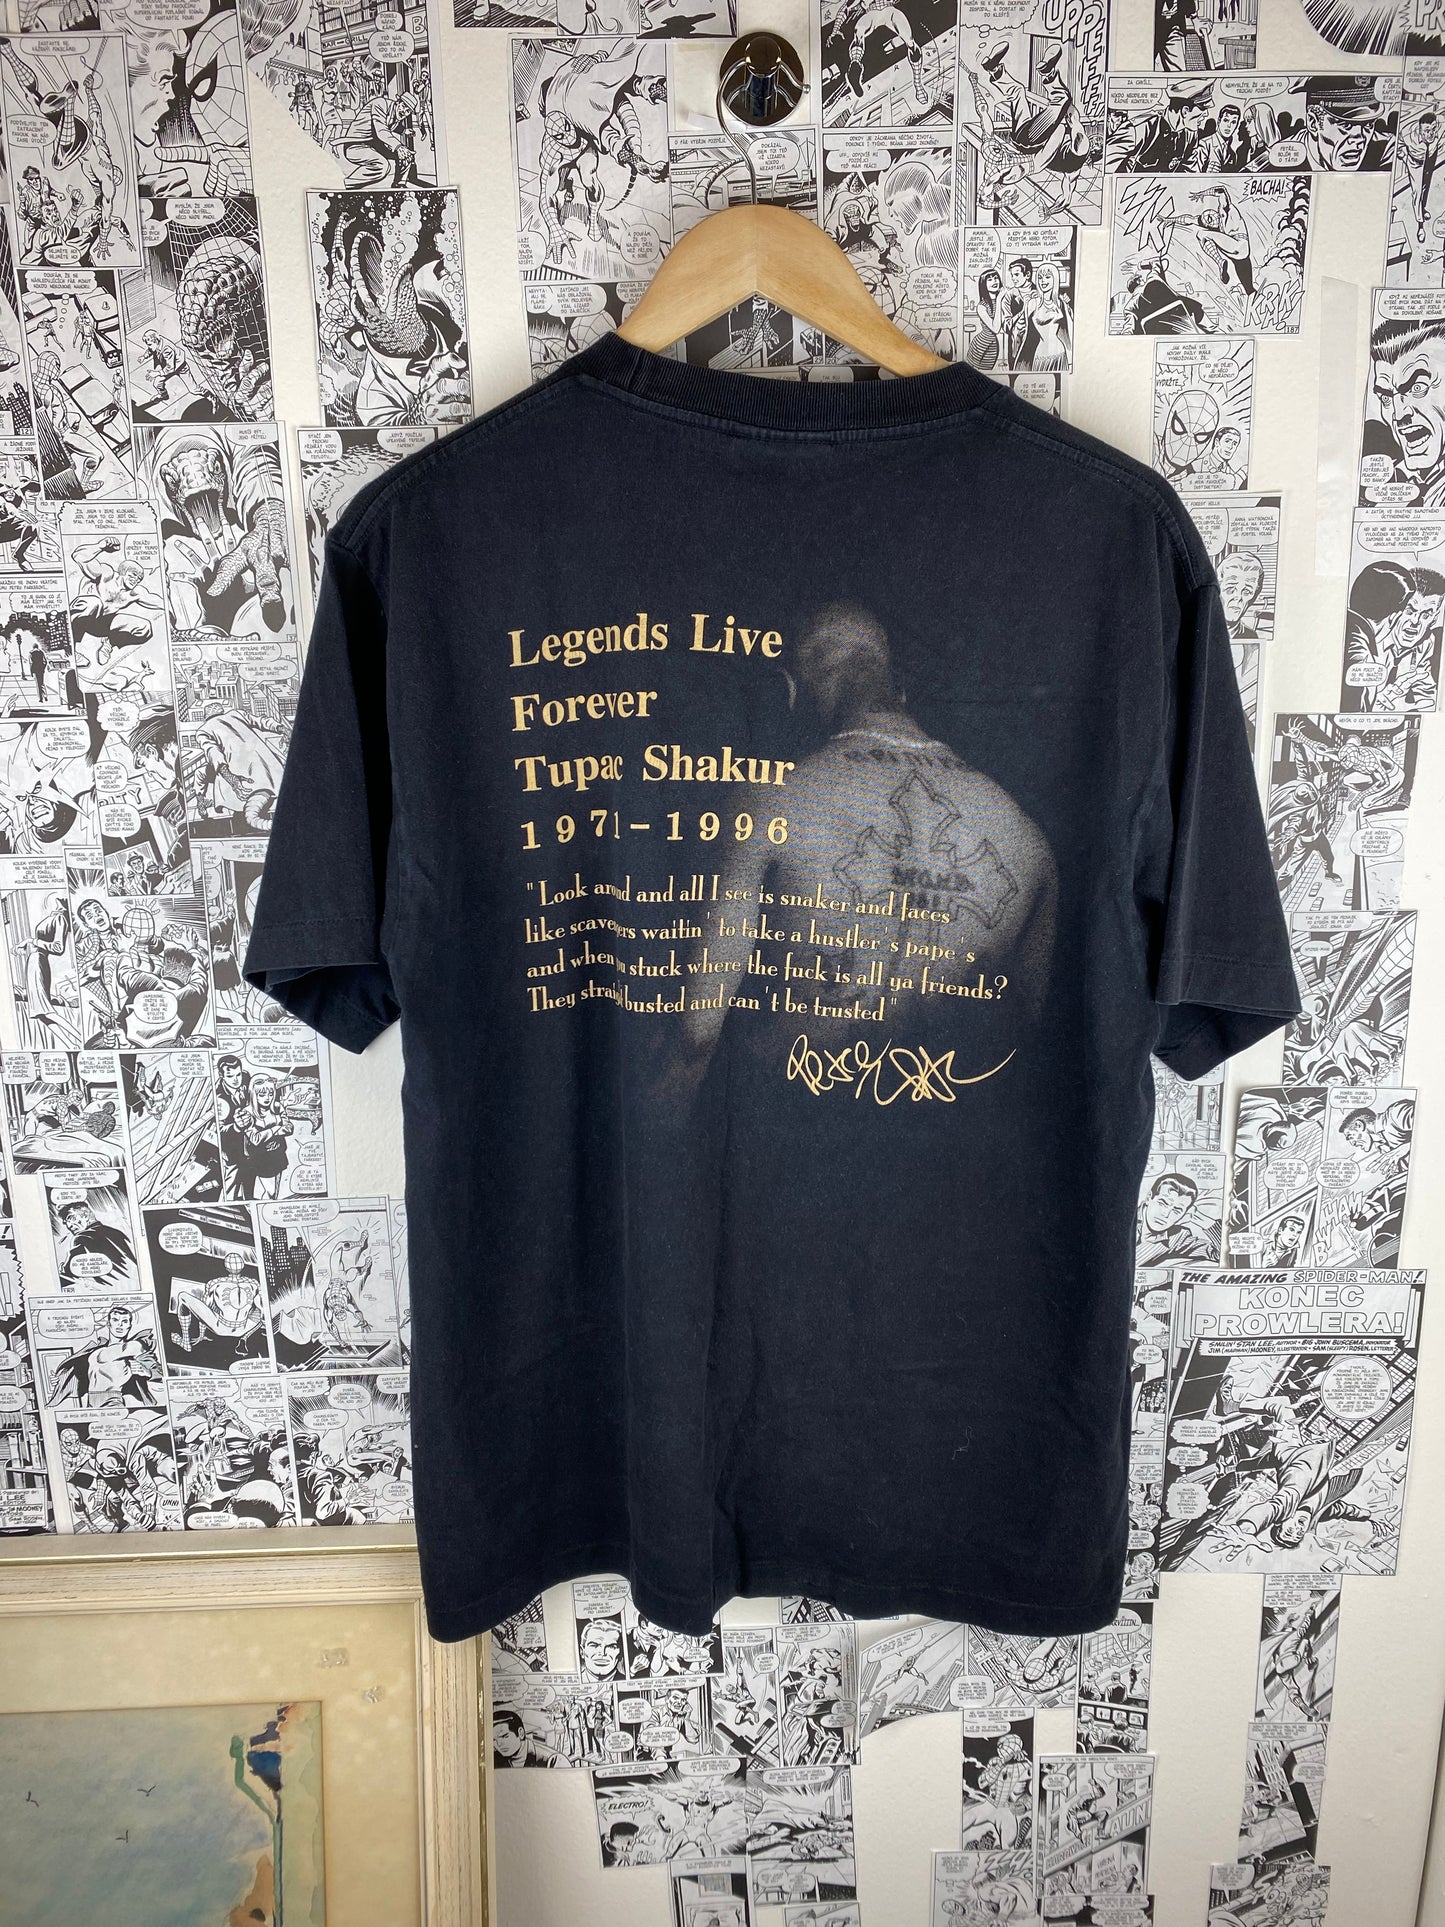 Vintage 2Pac “Memory of Tupac” t-shirt - size L